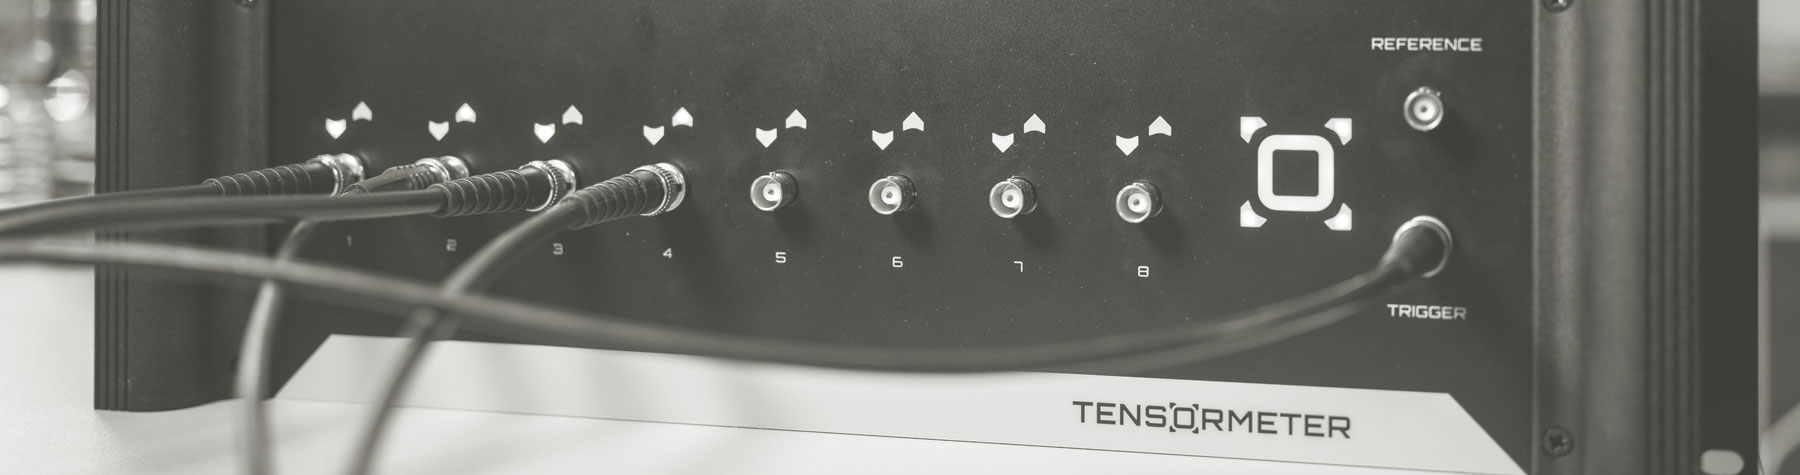 tensormeter-device-header